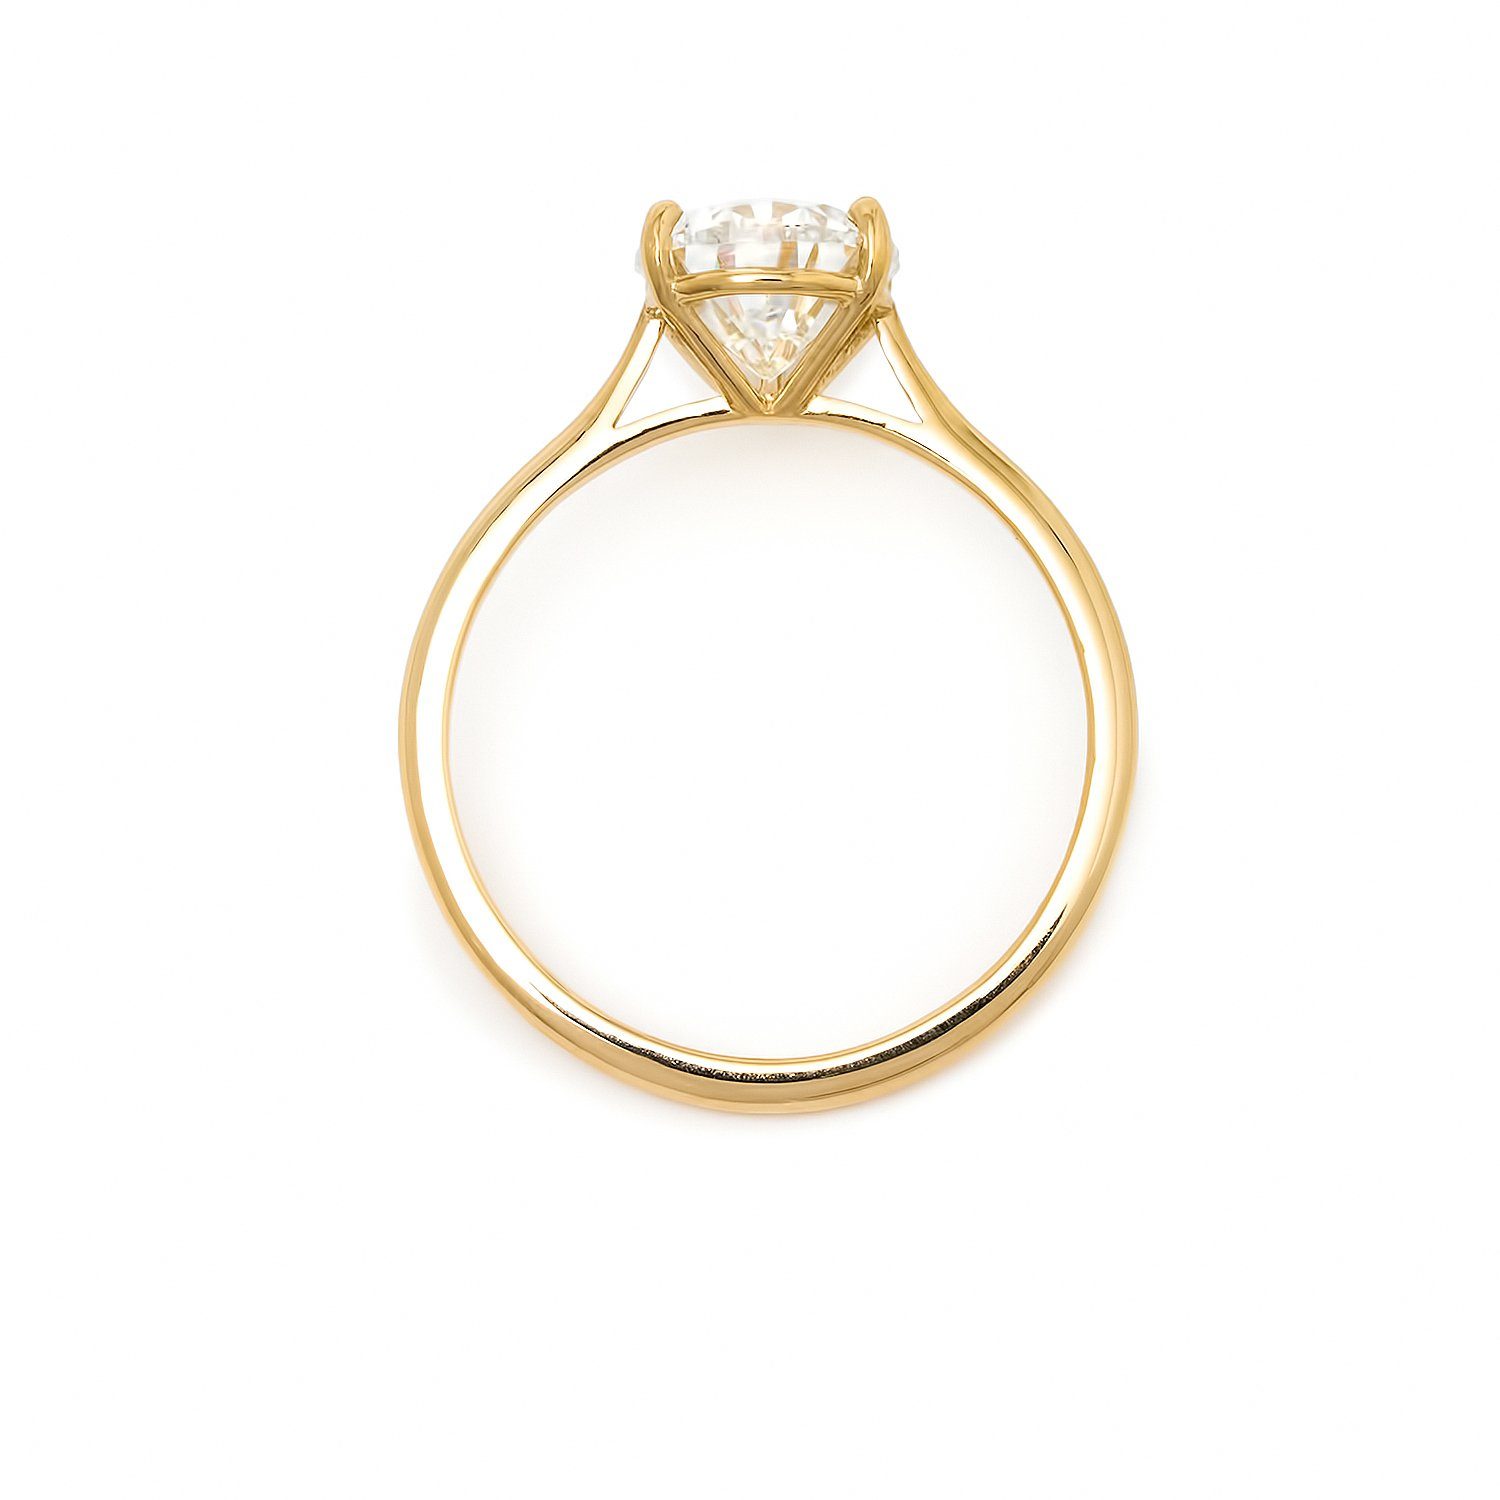 2 carat pear diamond engagement ring